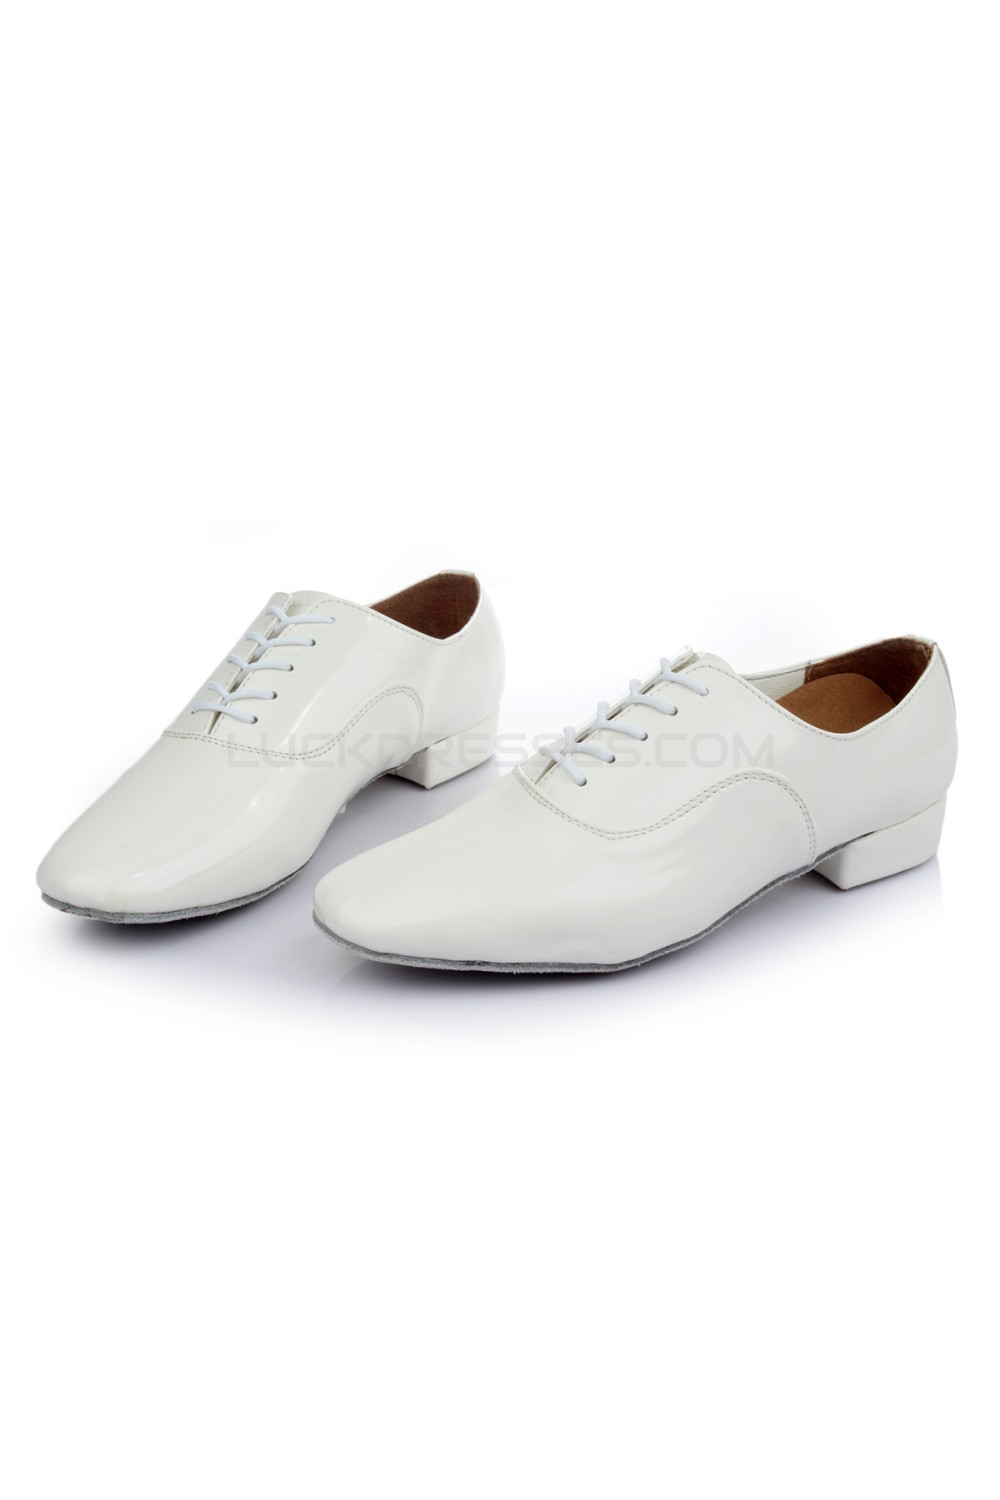 white dance shoes mens